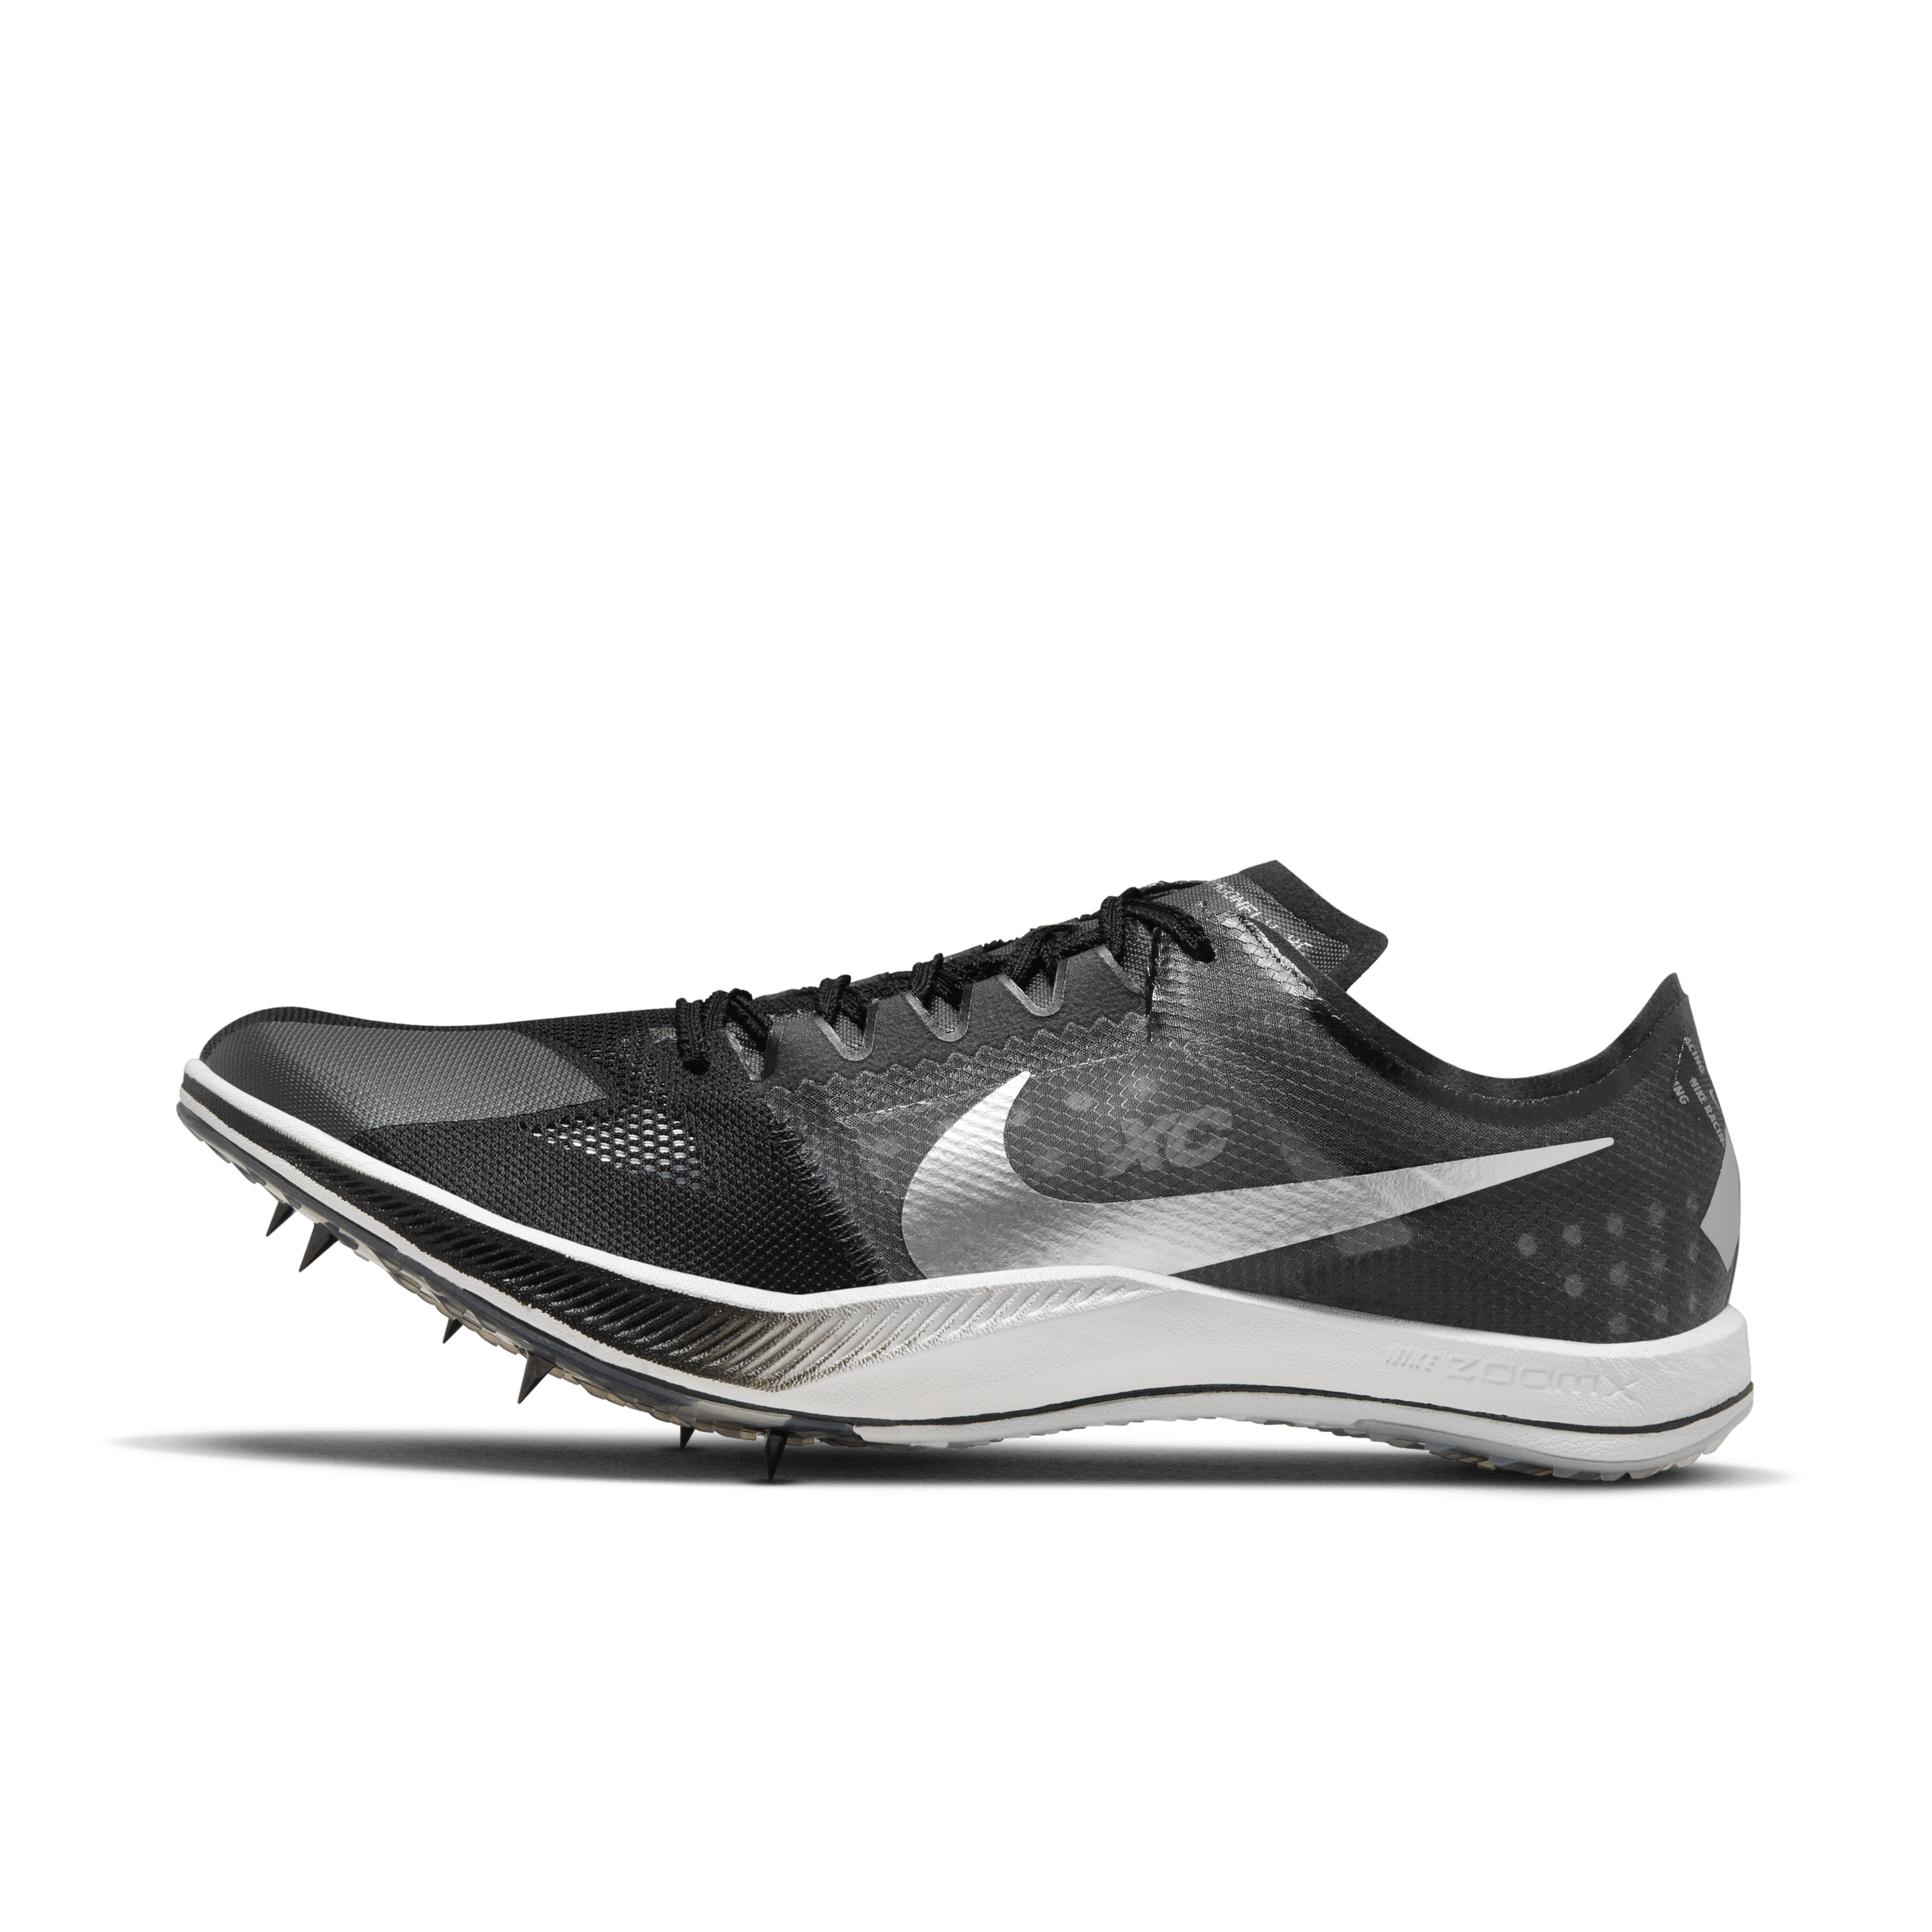 Nike ZoomX Dragonfly XC Zapatillas con clavos para campo a través - Negro